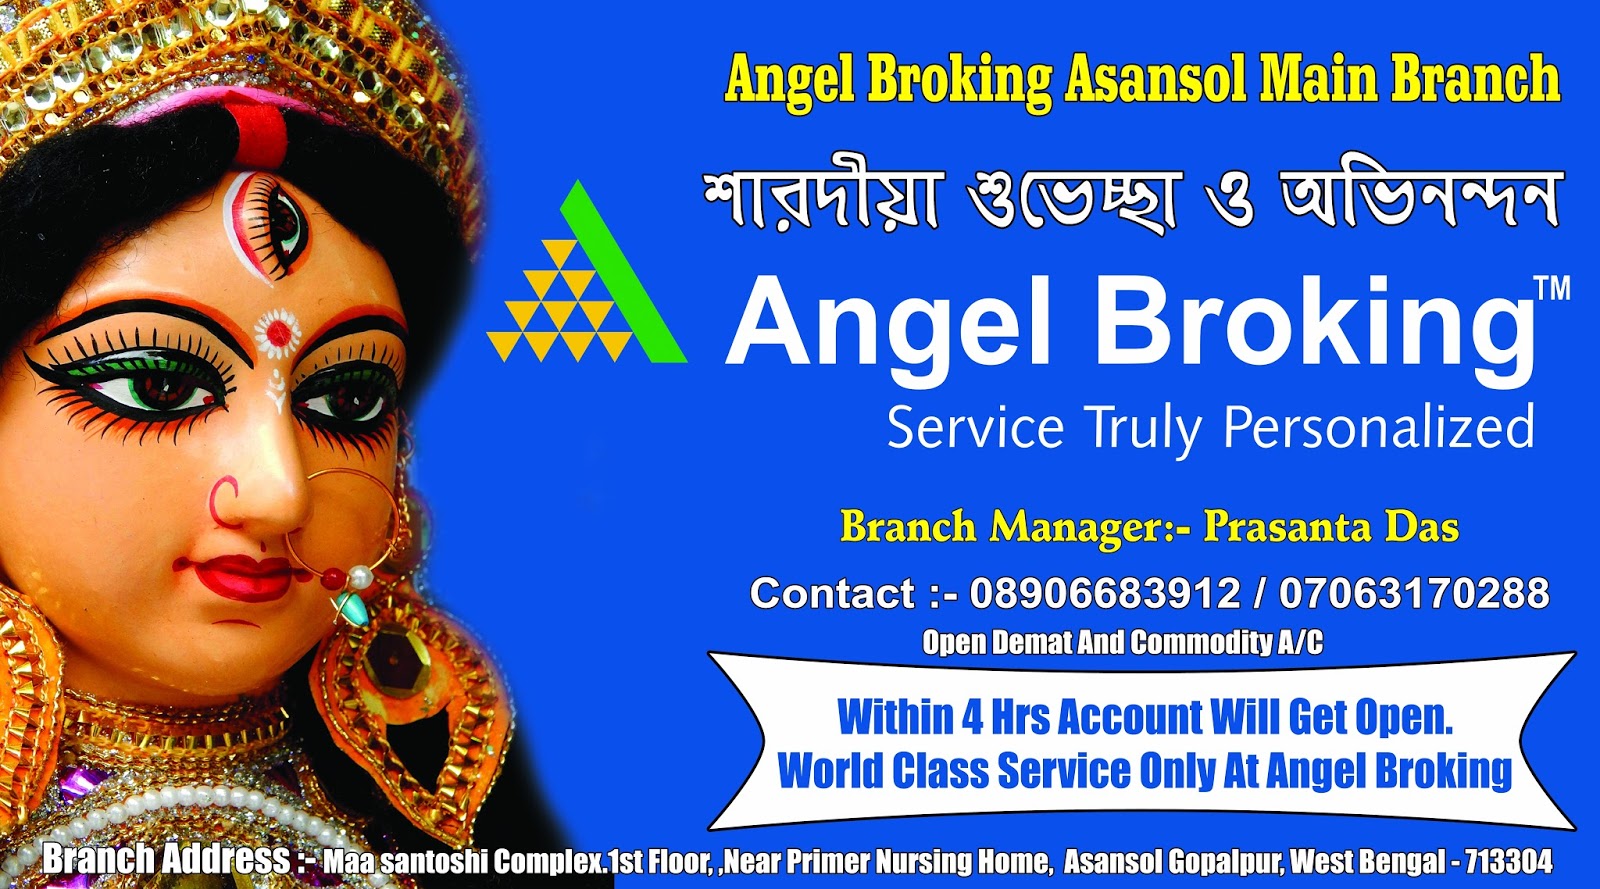 Angel Broking Asansol Branch